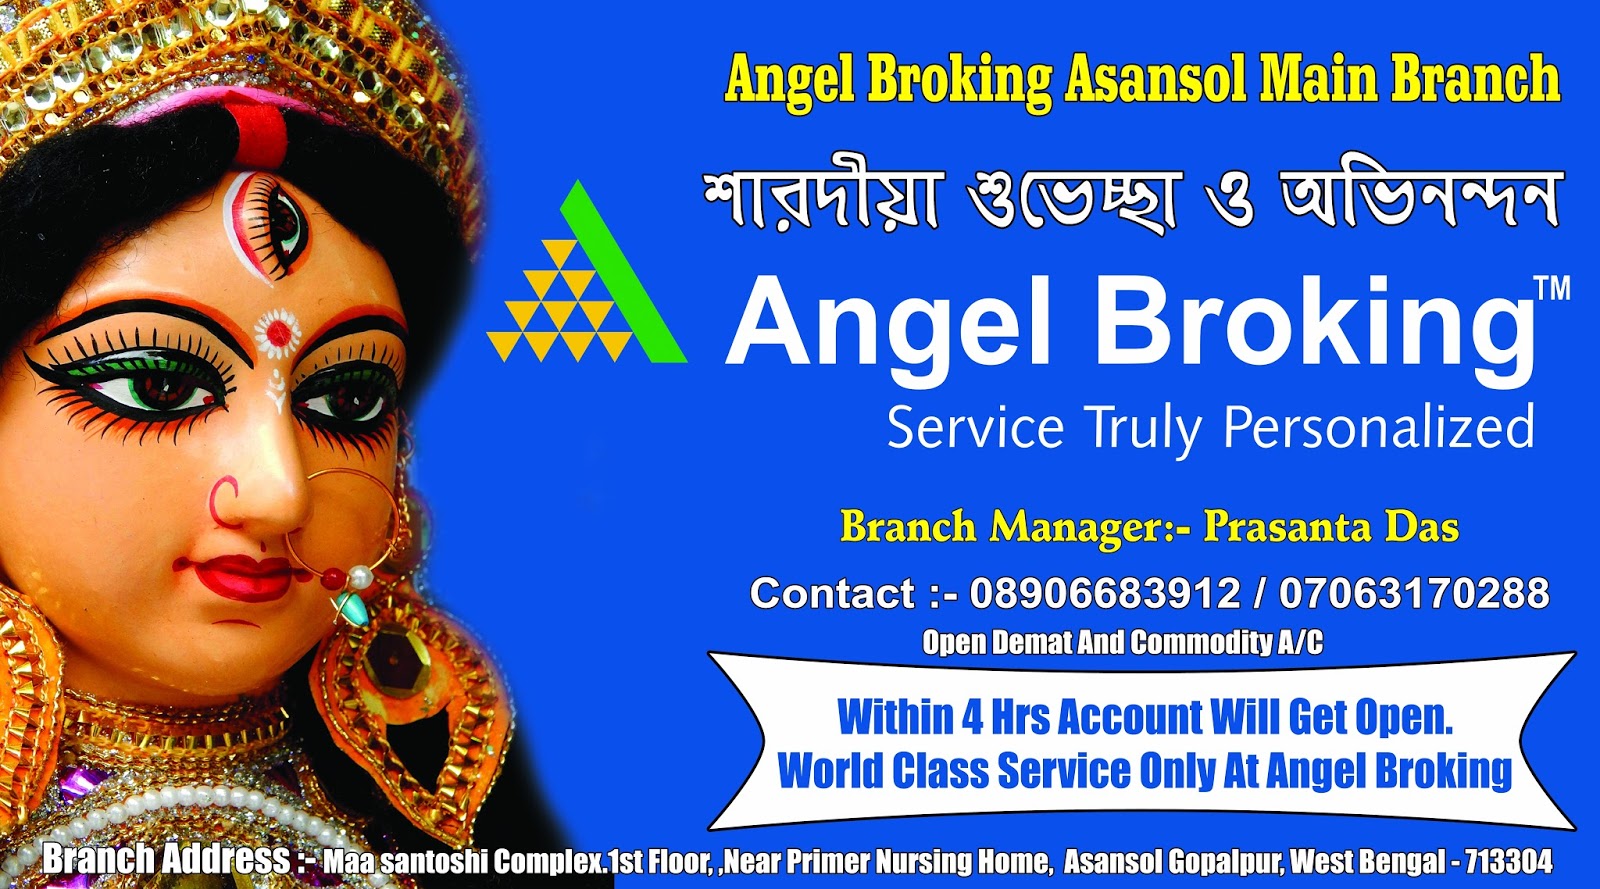 Angel Broking Asansol Branch